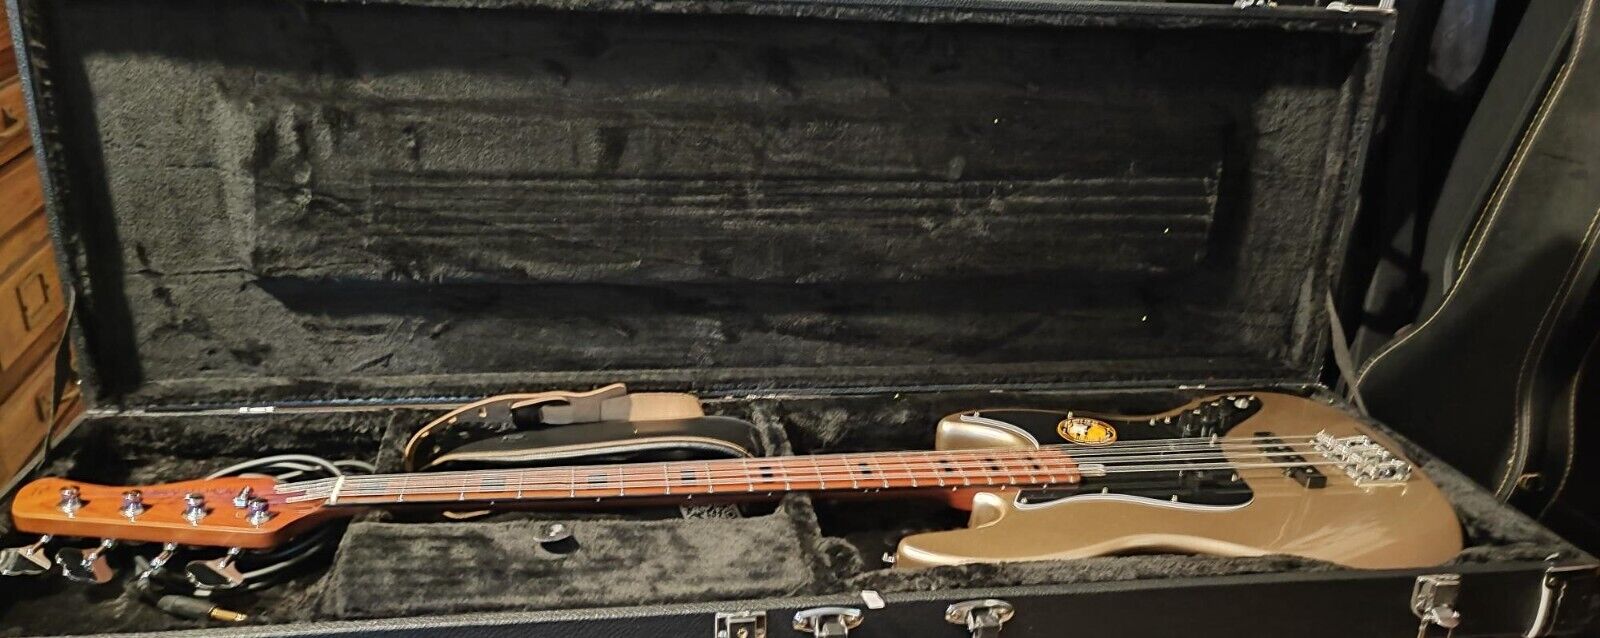 Brand New Rare Gold "SIRE MARCUS MILLER" V5 Passive Jazz Bass w/ Hardshell case "SIRE MARCUS MILLER" 2N22212410 - фотография #10